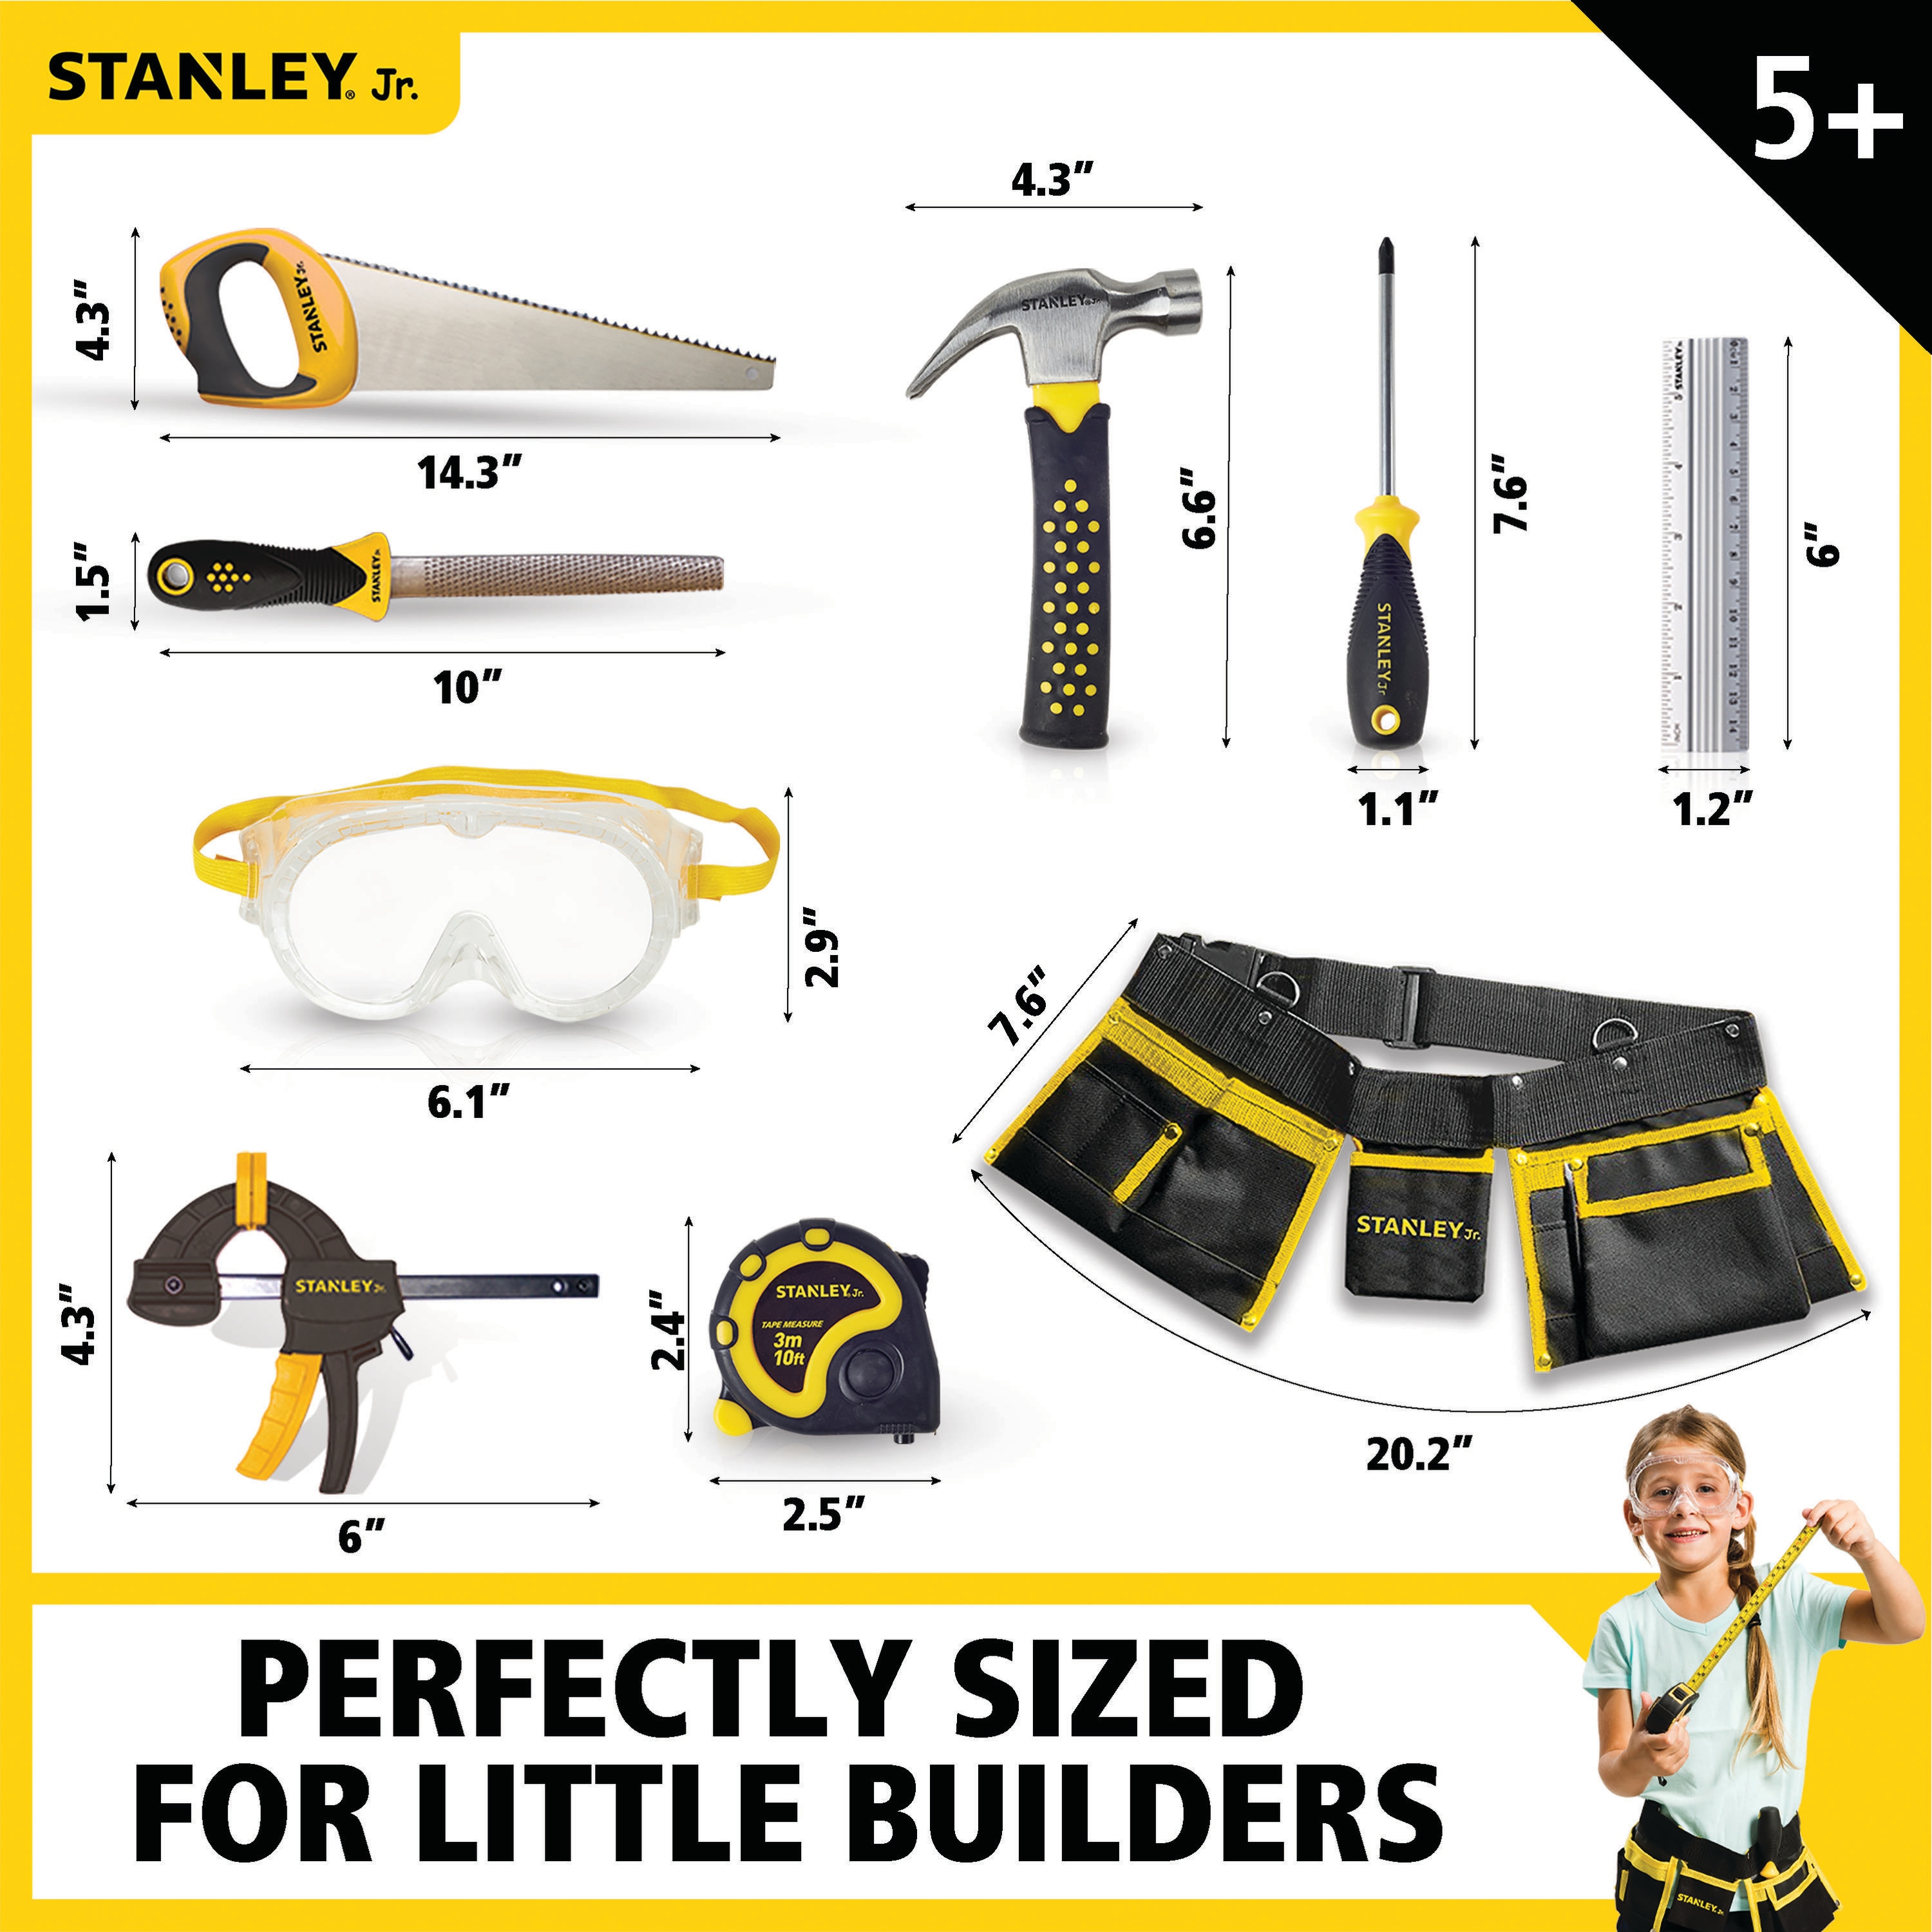 Stanley Jr. 5 Piece Tool Set Including Tool Belt for Kids NEW